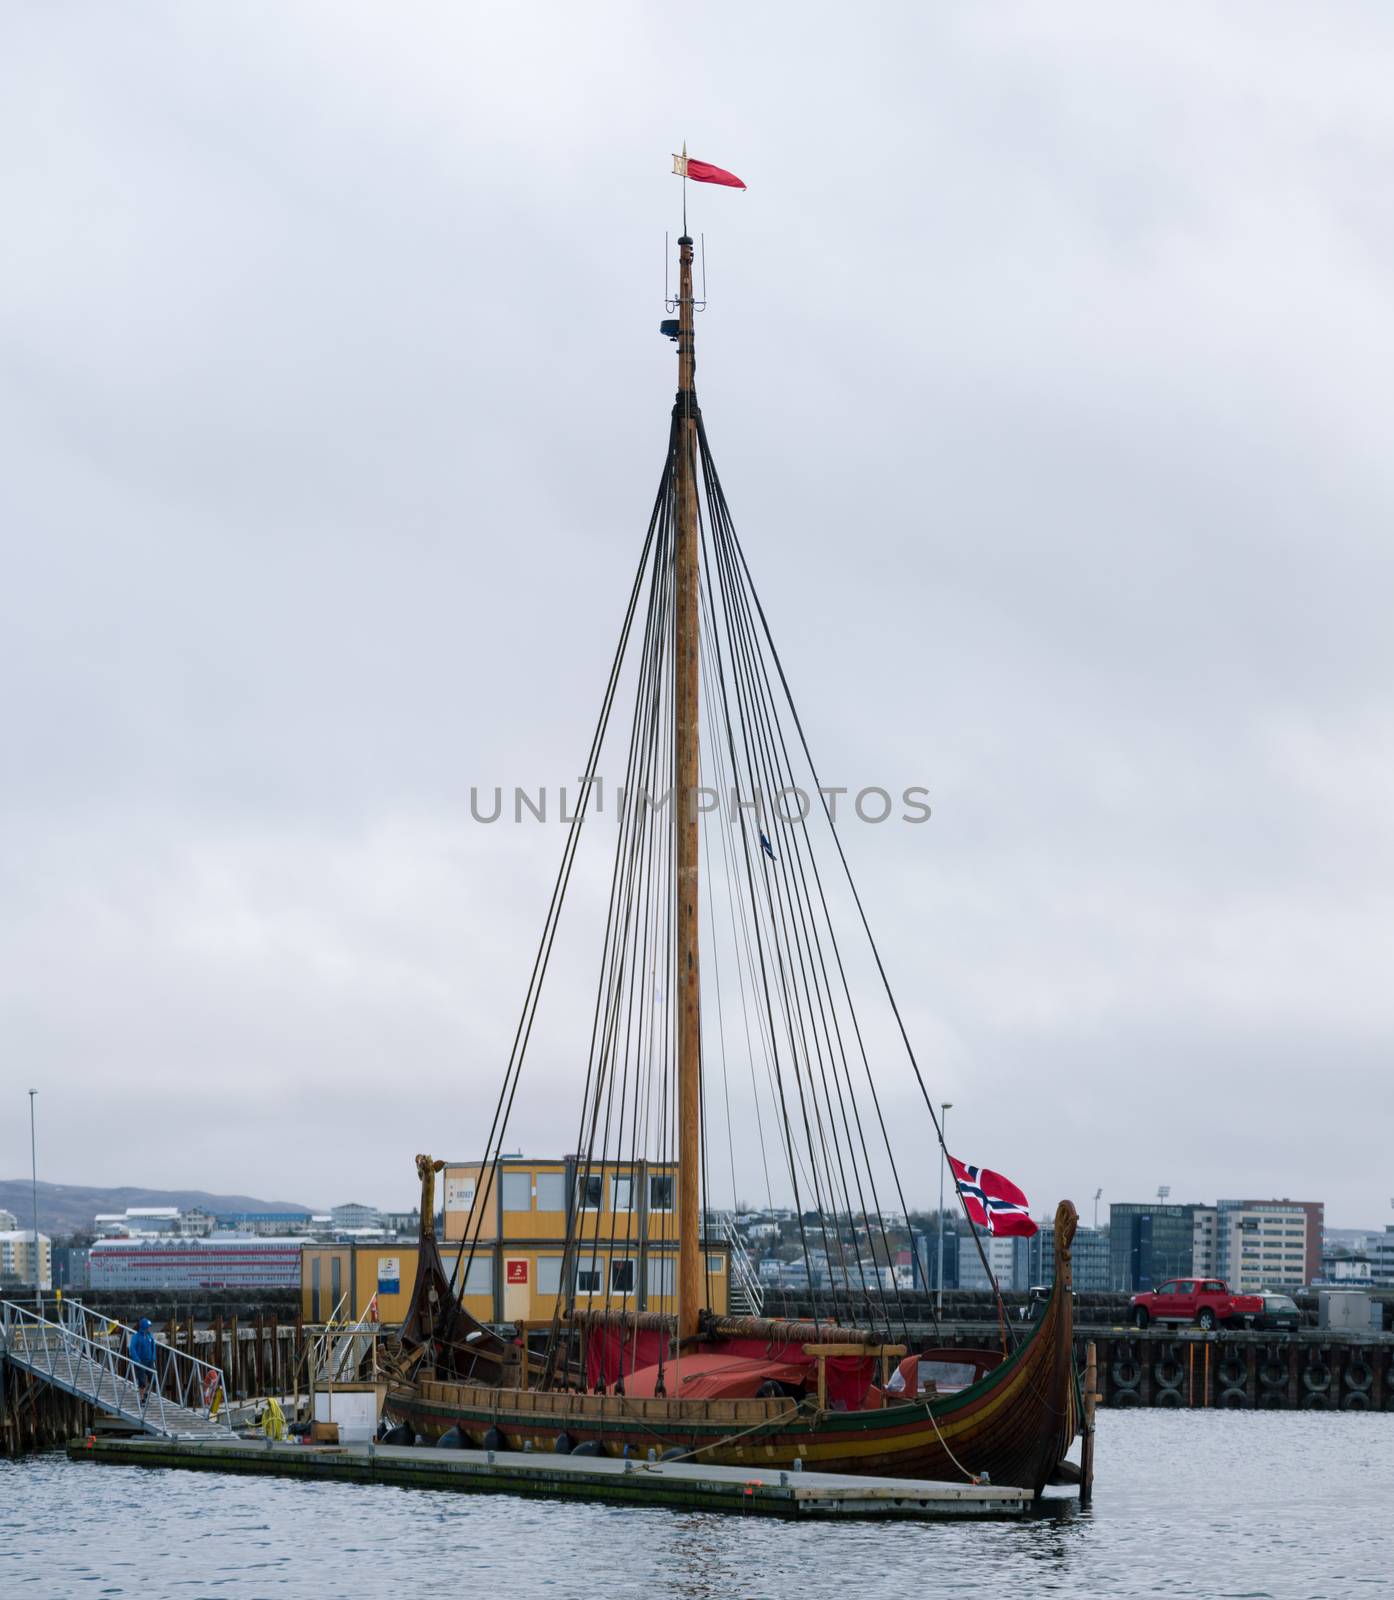 Viking ship reykjavik by thomas_males